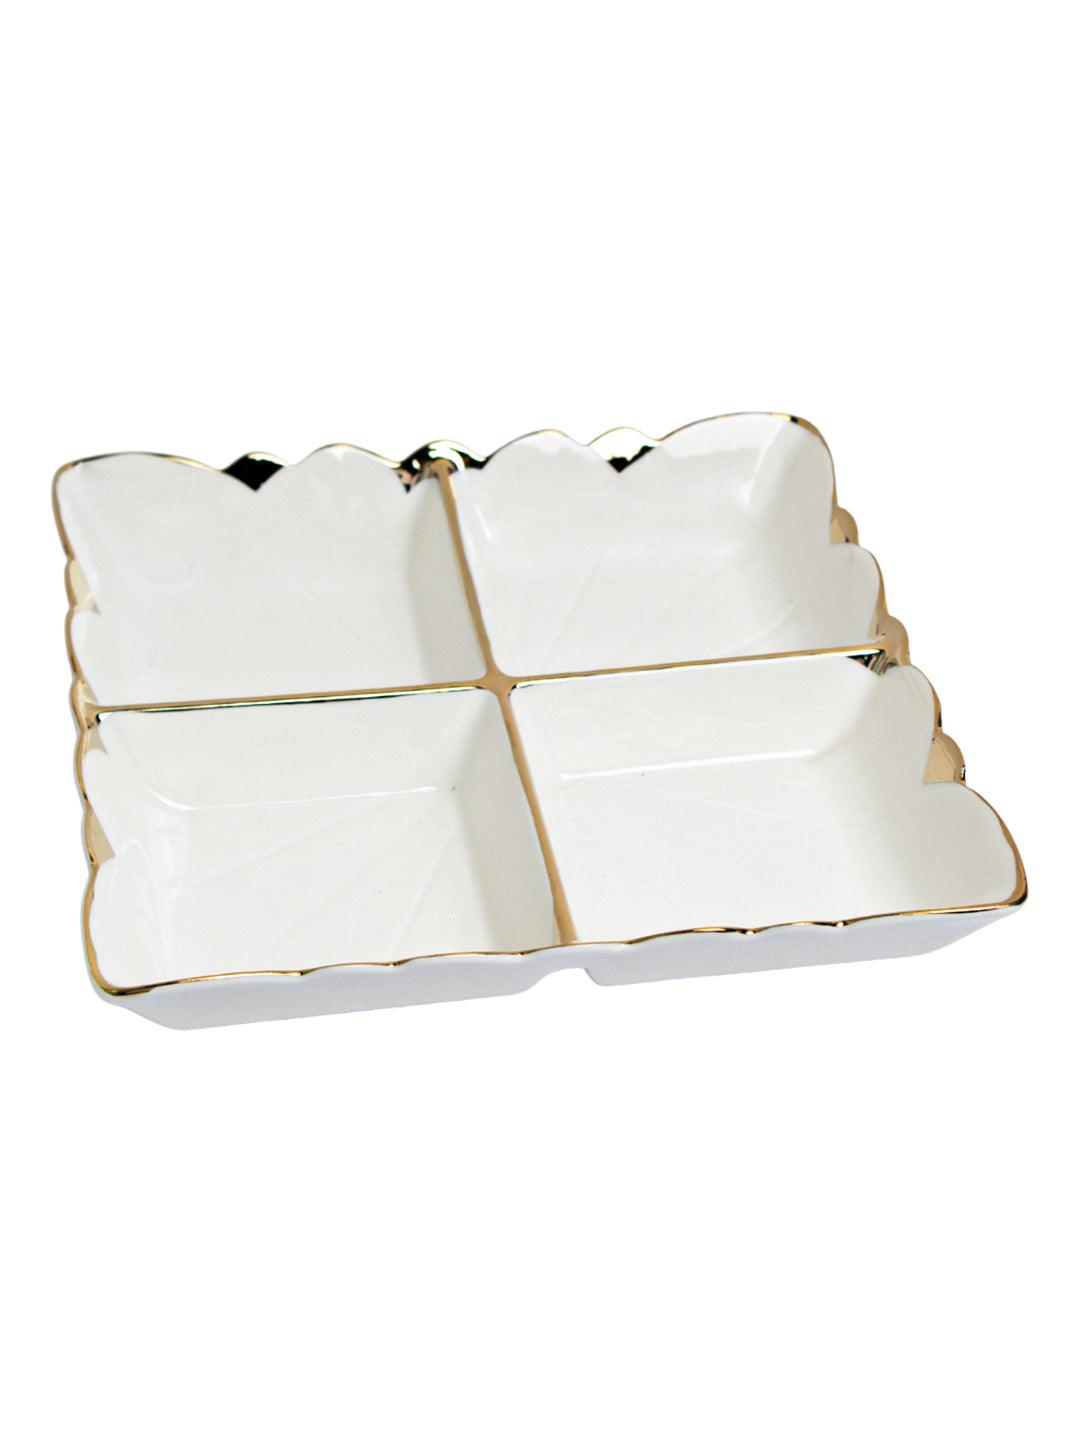 Antique Off White Ceramic Divided Serving Dish - 21 x 21 x 4CM - MARKET 99